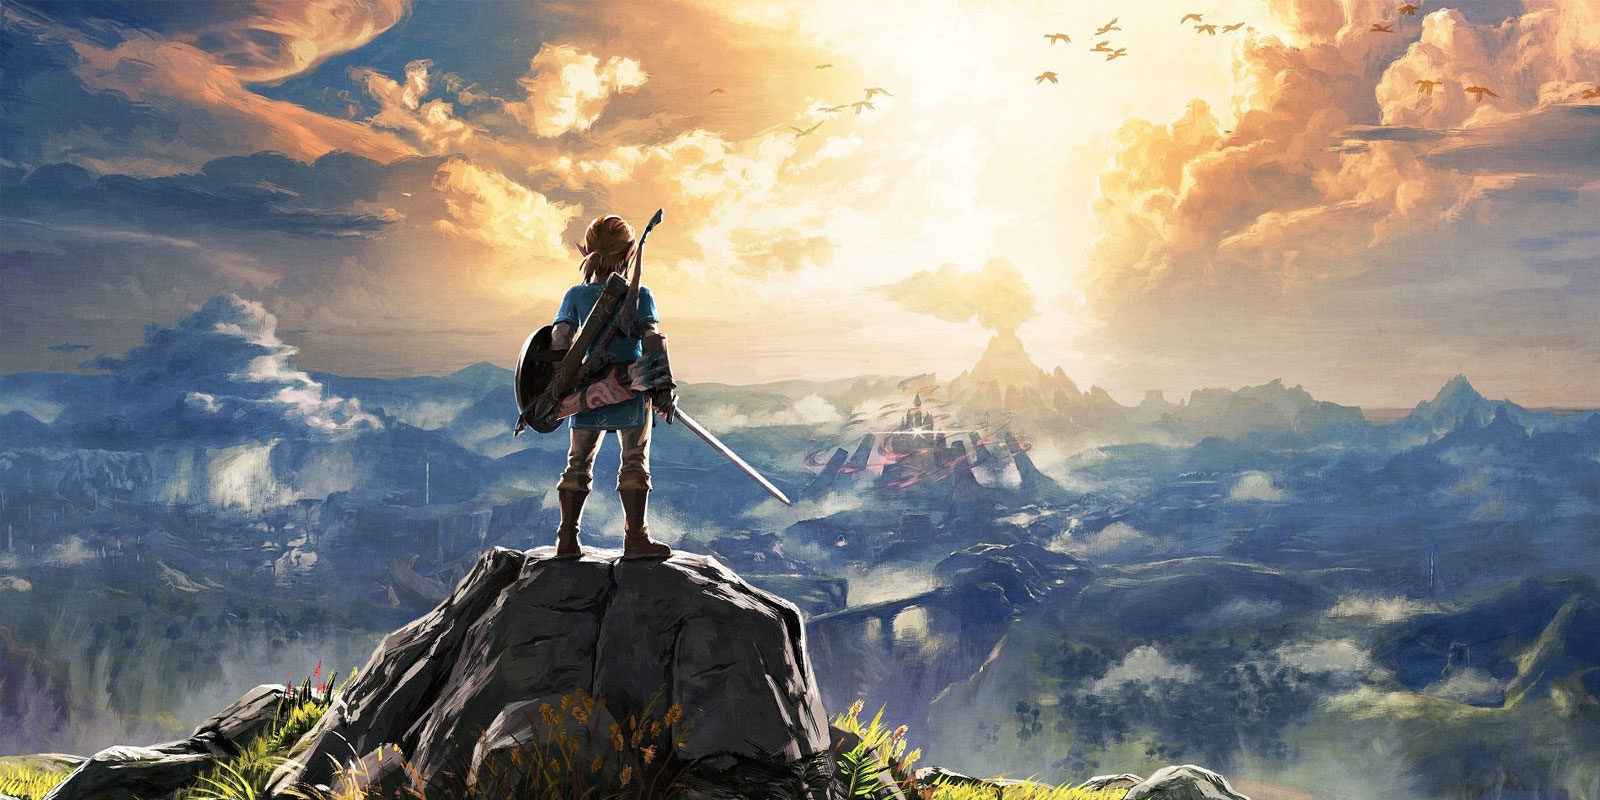 La historia de 'The Legend of Zelda: Breath of the Wild'